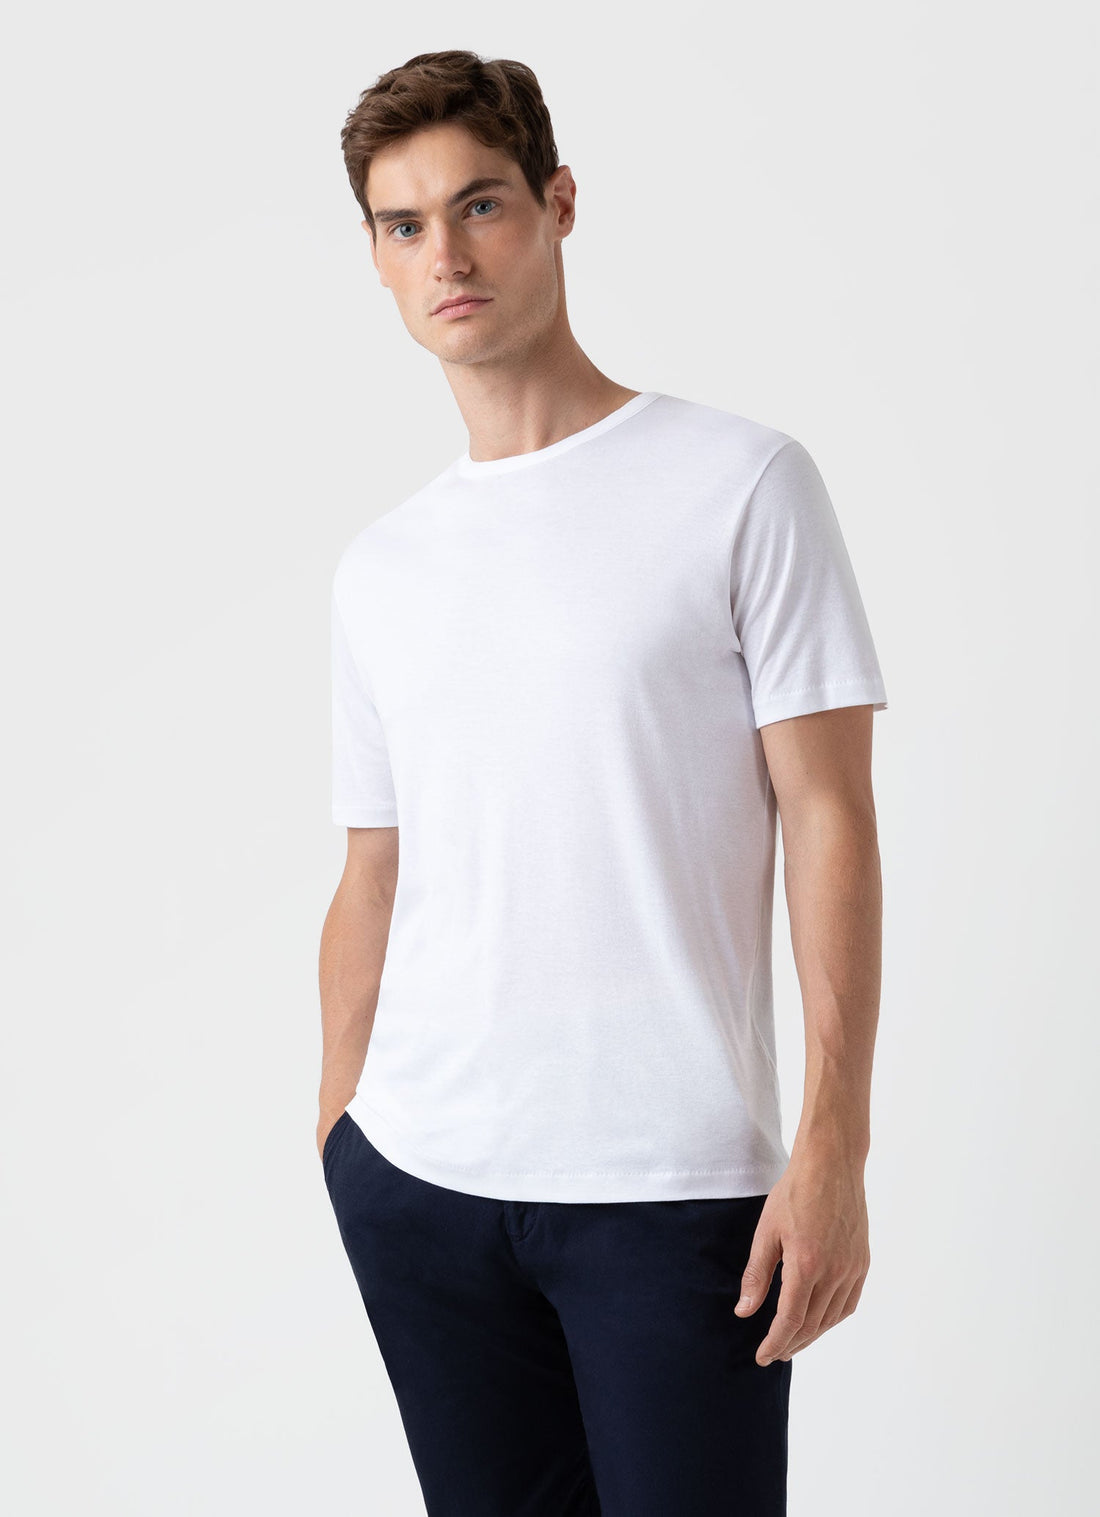 Leif Nelson Mens Oversize Slim Fit Crewneck Cotton T Shirt Short Sleeve  Classic Stylish Skin Friendly Tee